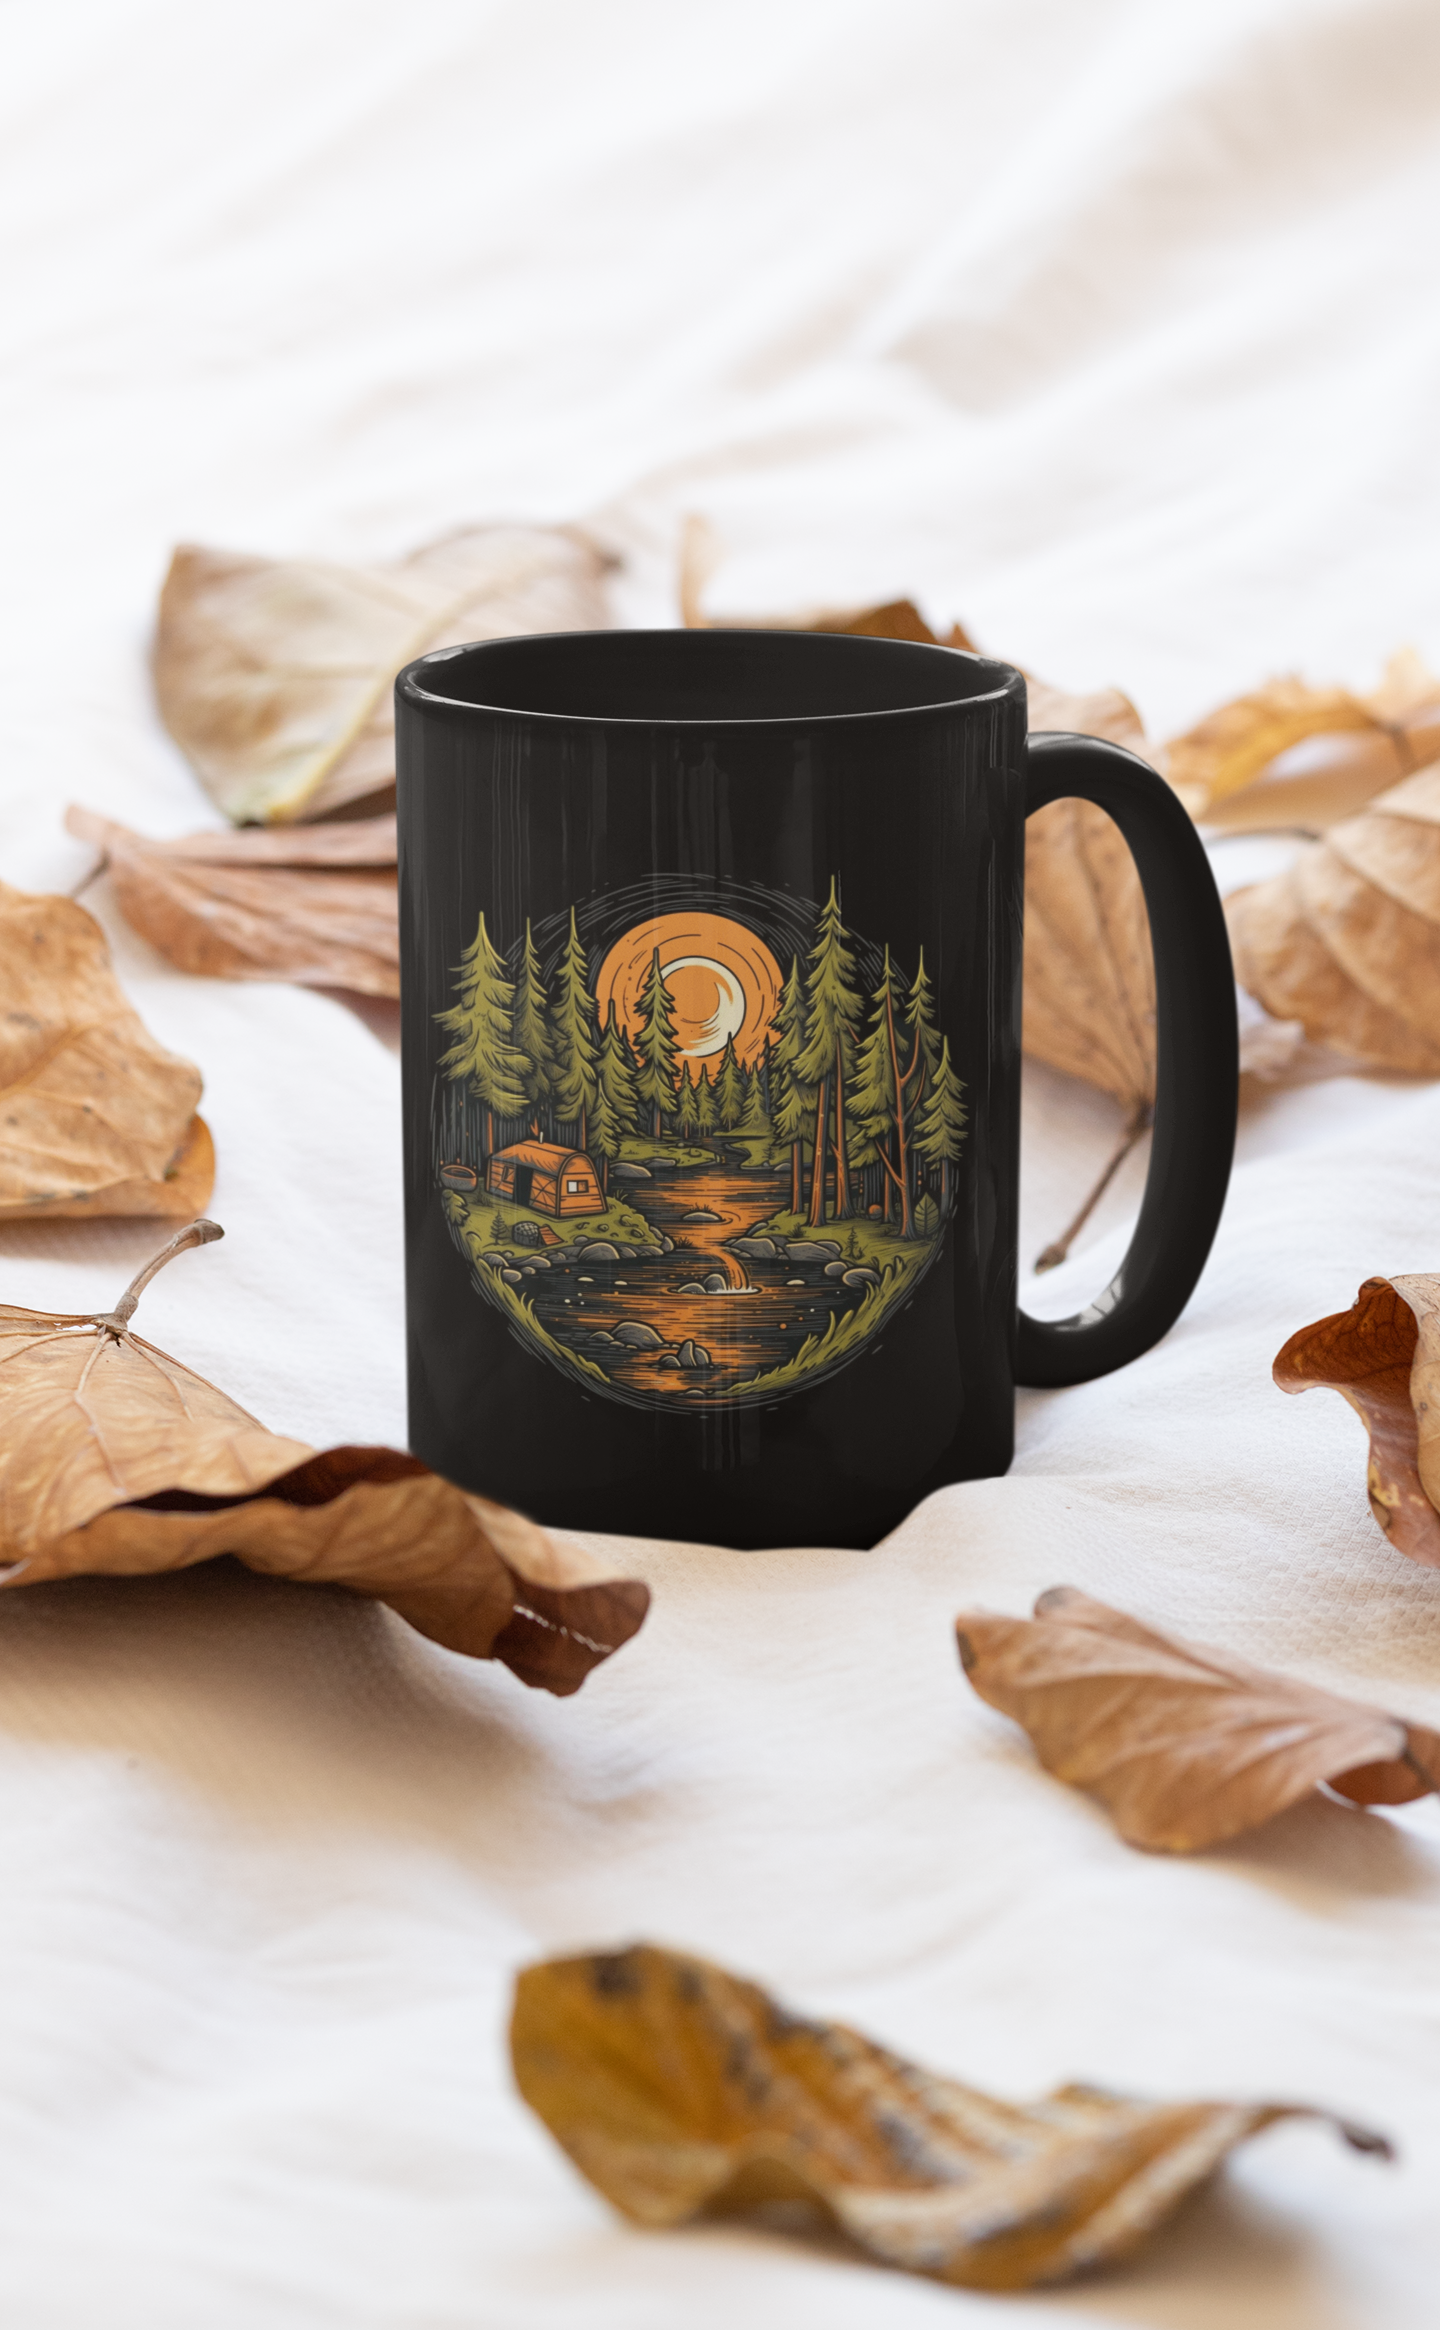 Camping Mug, Campfire Coffee Cup, Tent in Woods by Babbling Brook with Orange Moon Glow, Camp Gift, Ceramic Mug 15oz, Camp Mug, Camp Tea Cup